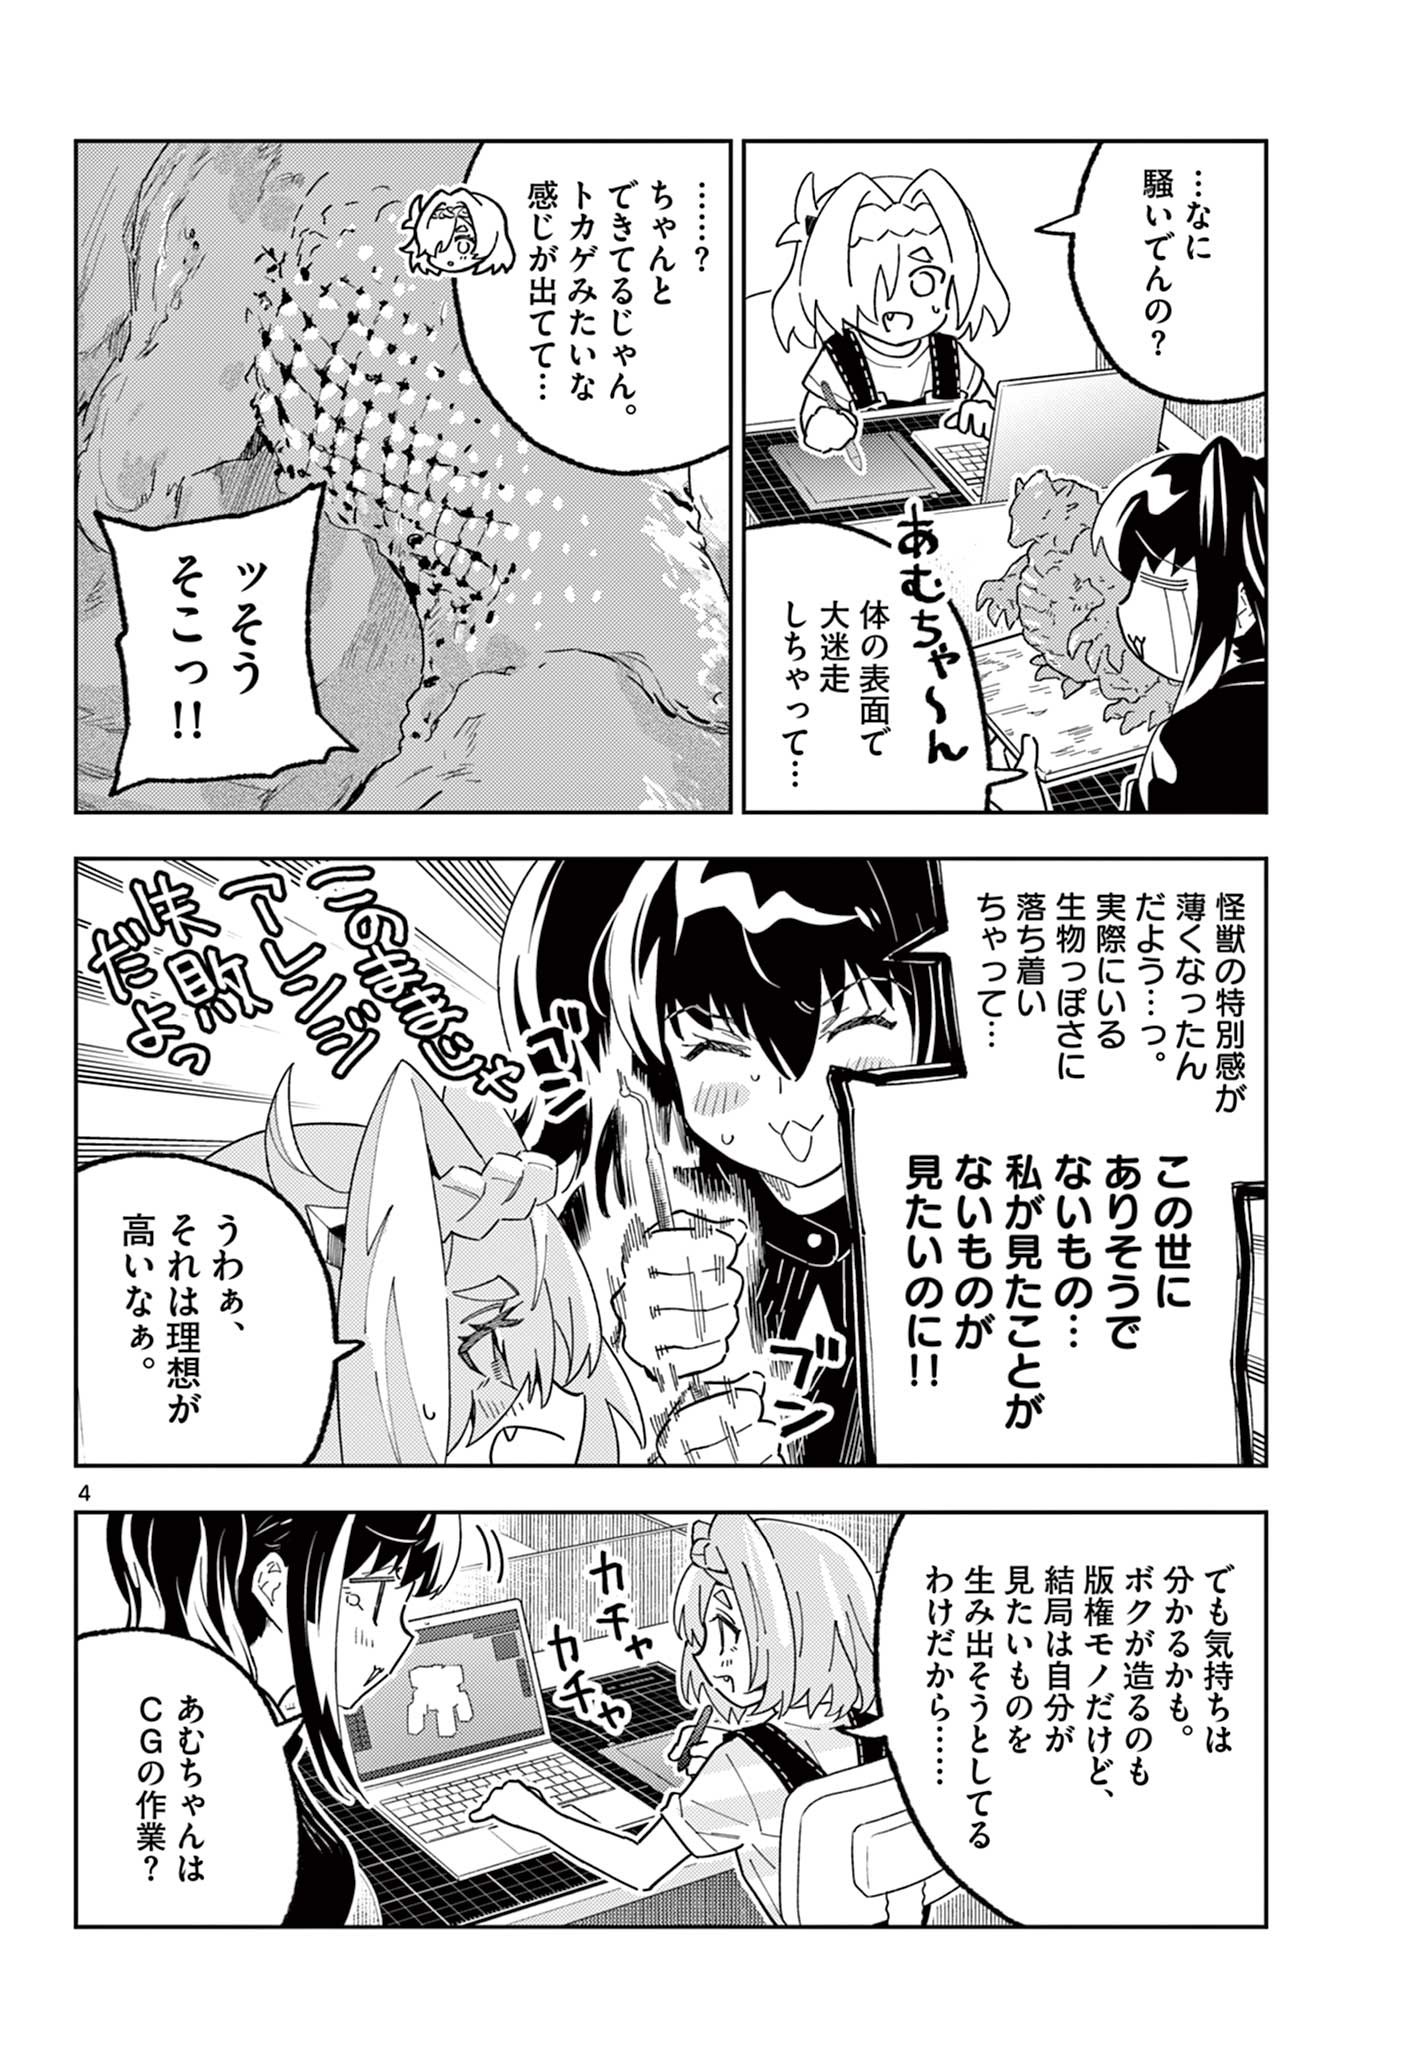 Gareki! Modeller Girls no Houkago - Chapter 16 - Page 4